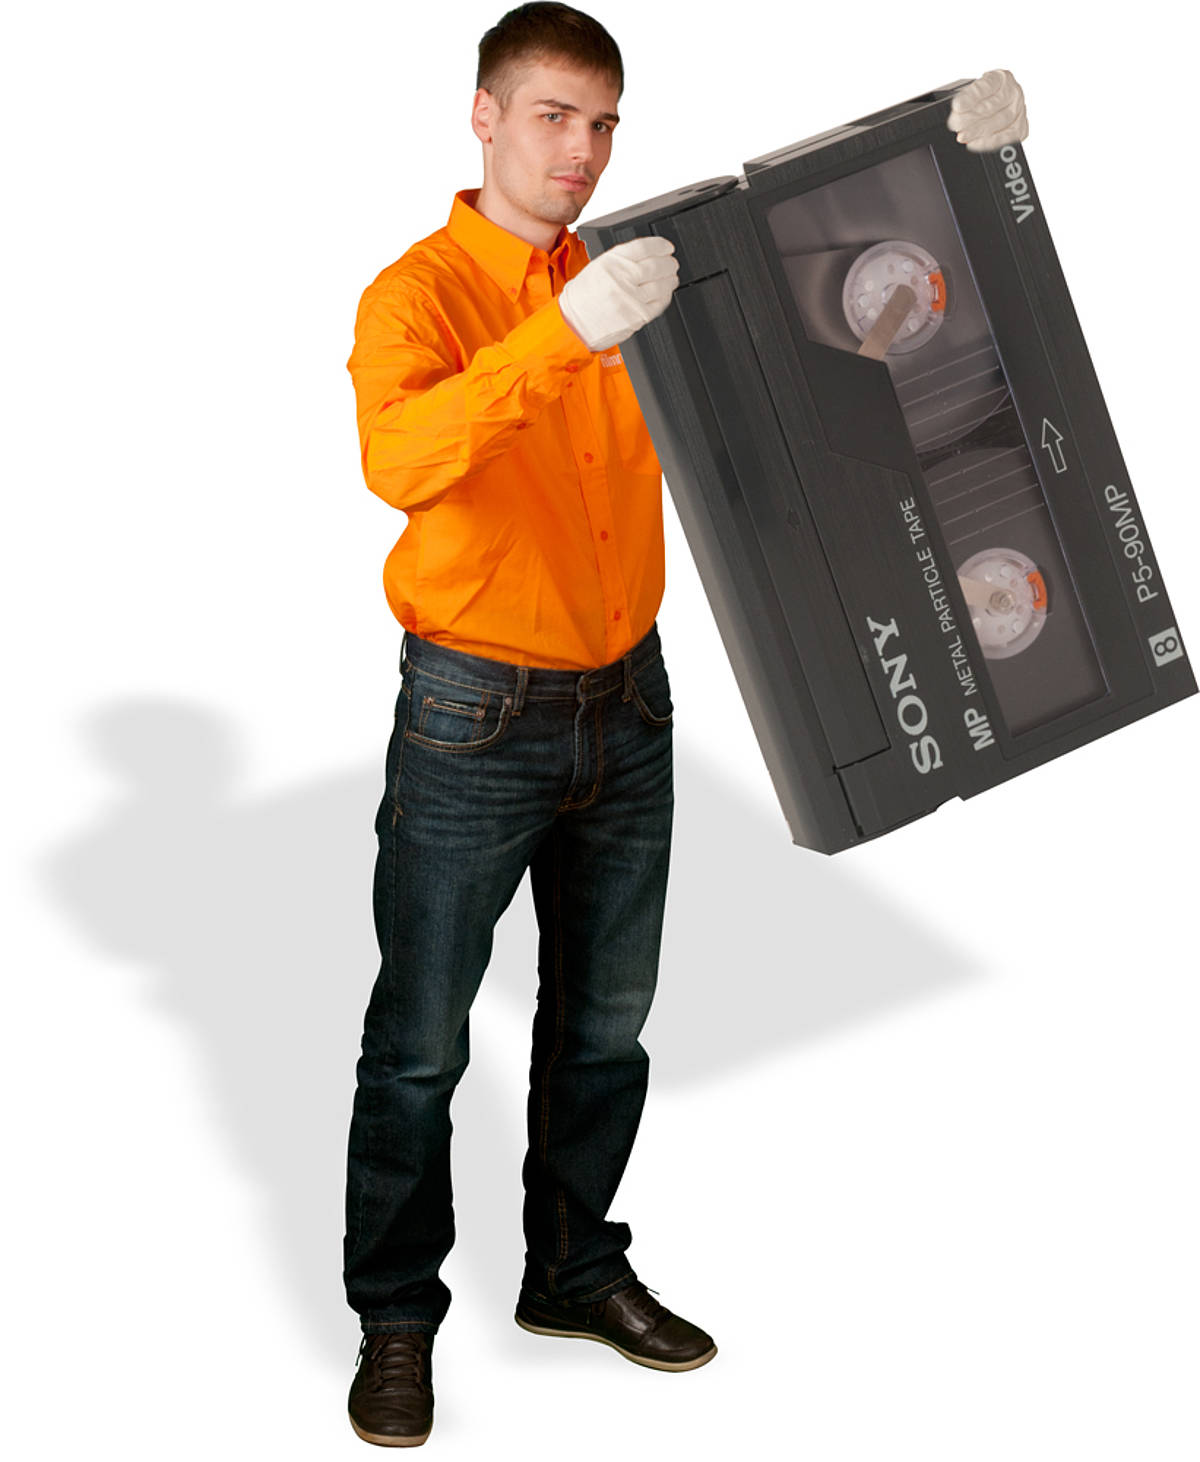 Video8-Kassetten digitalisieren